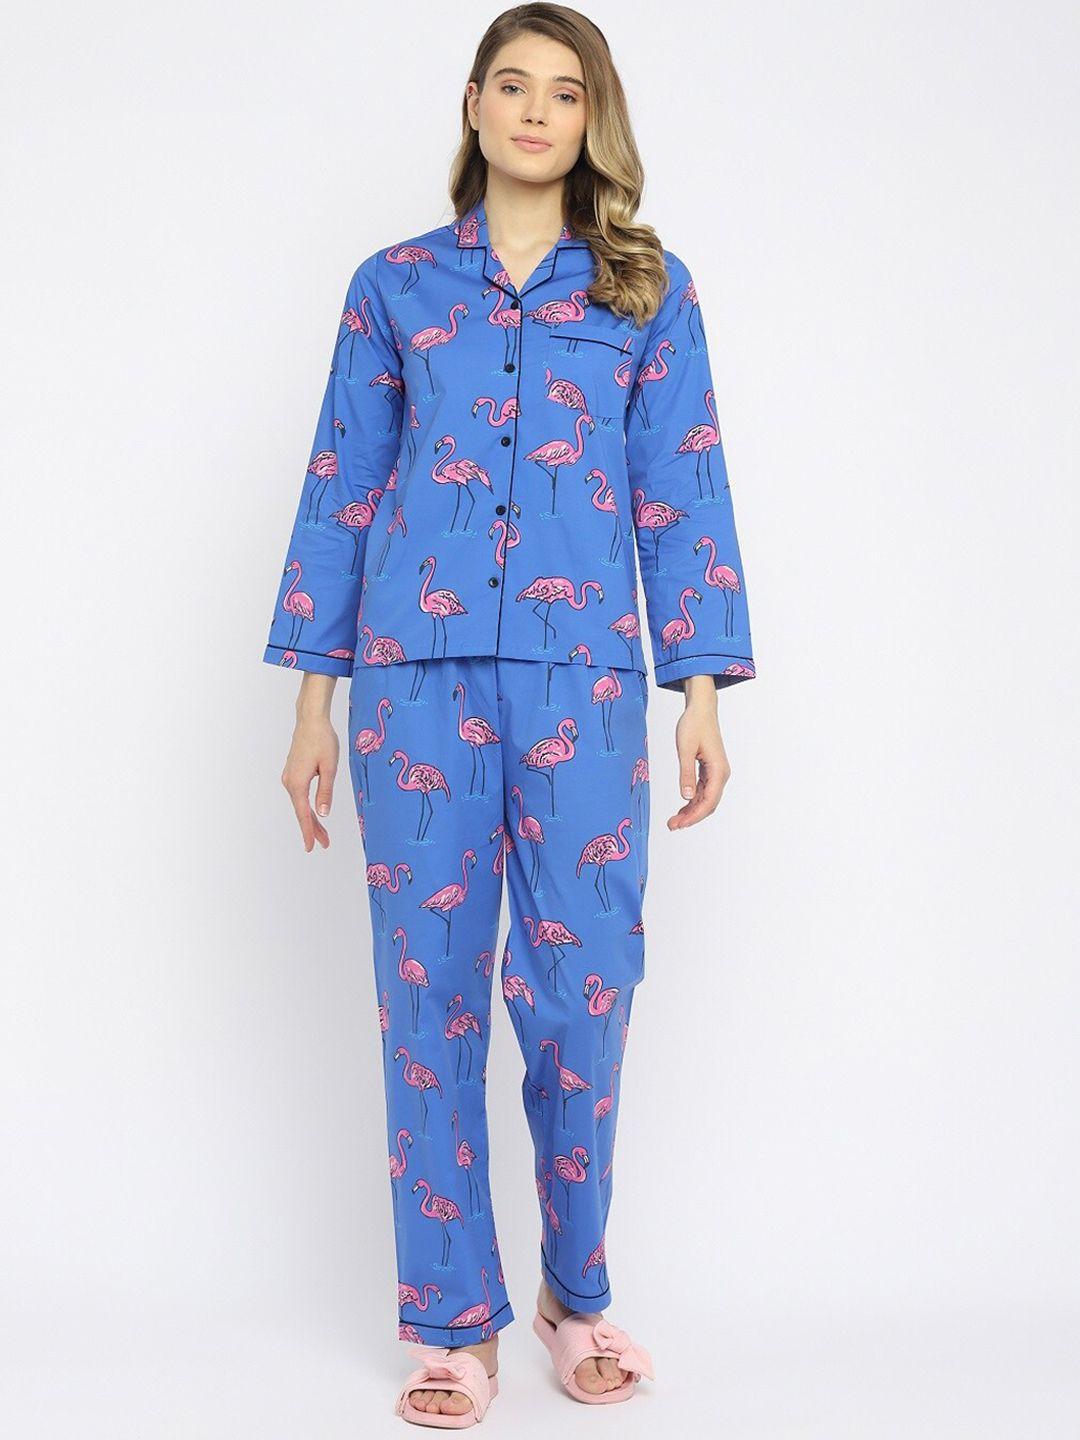 shopbloom women blue & pink flamingo printed pure cotton night suit